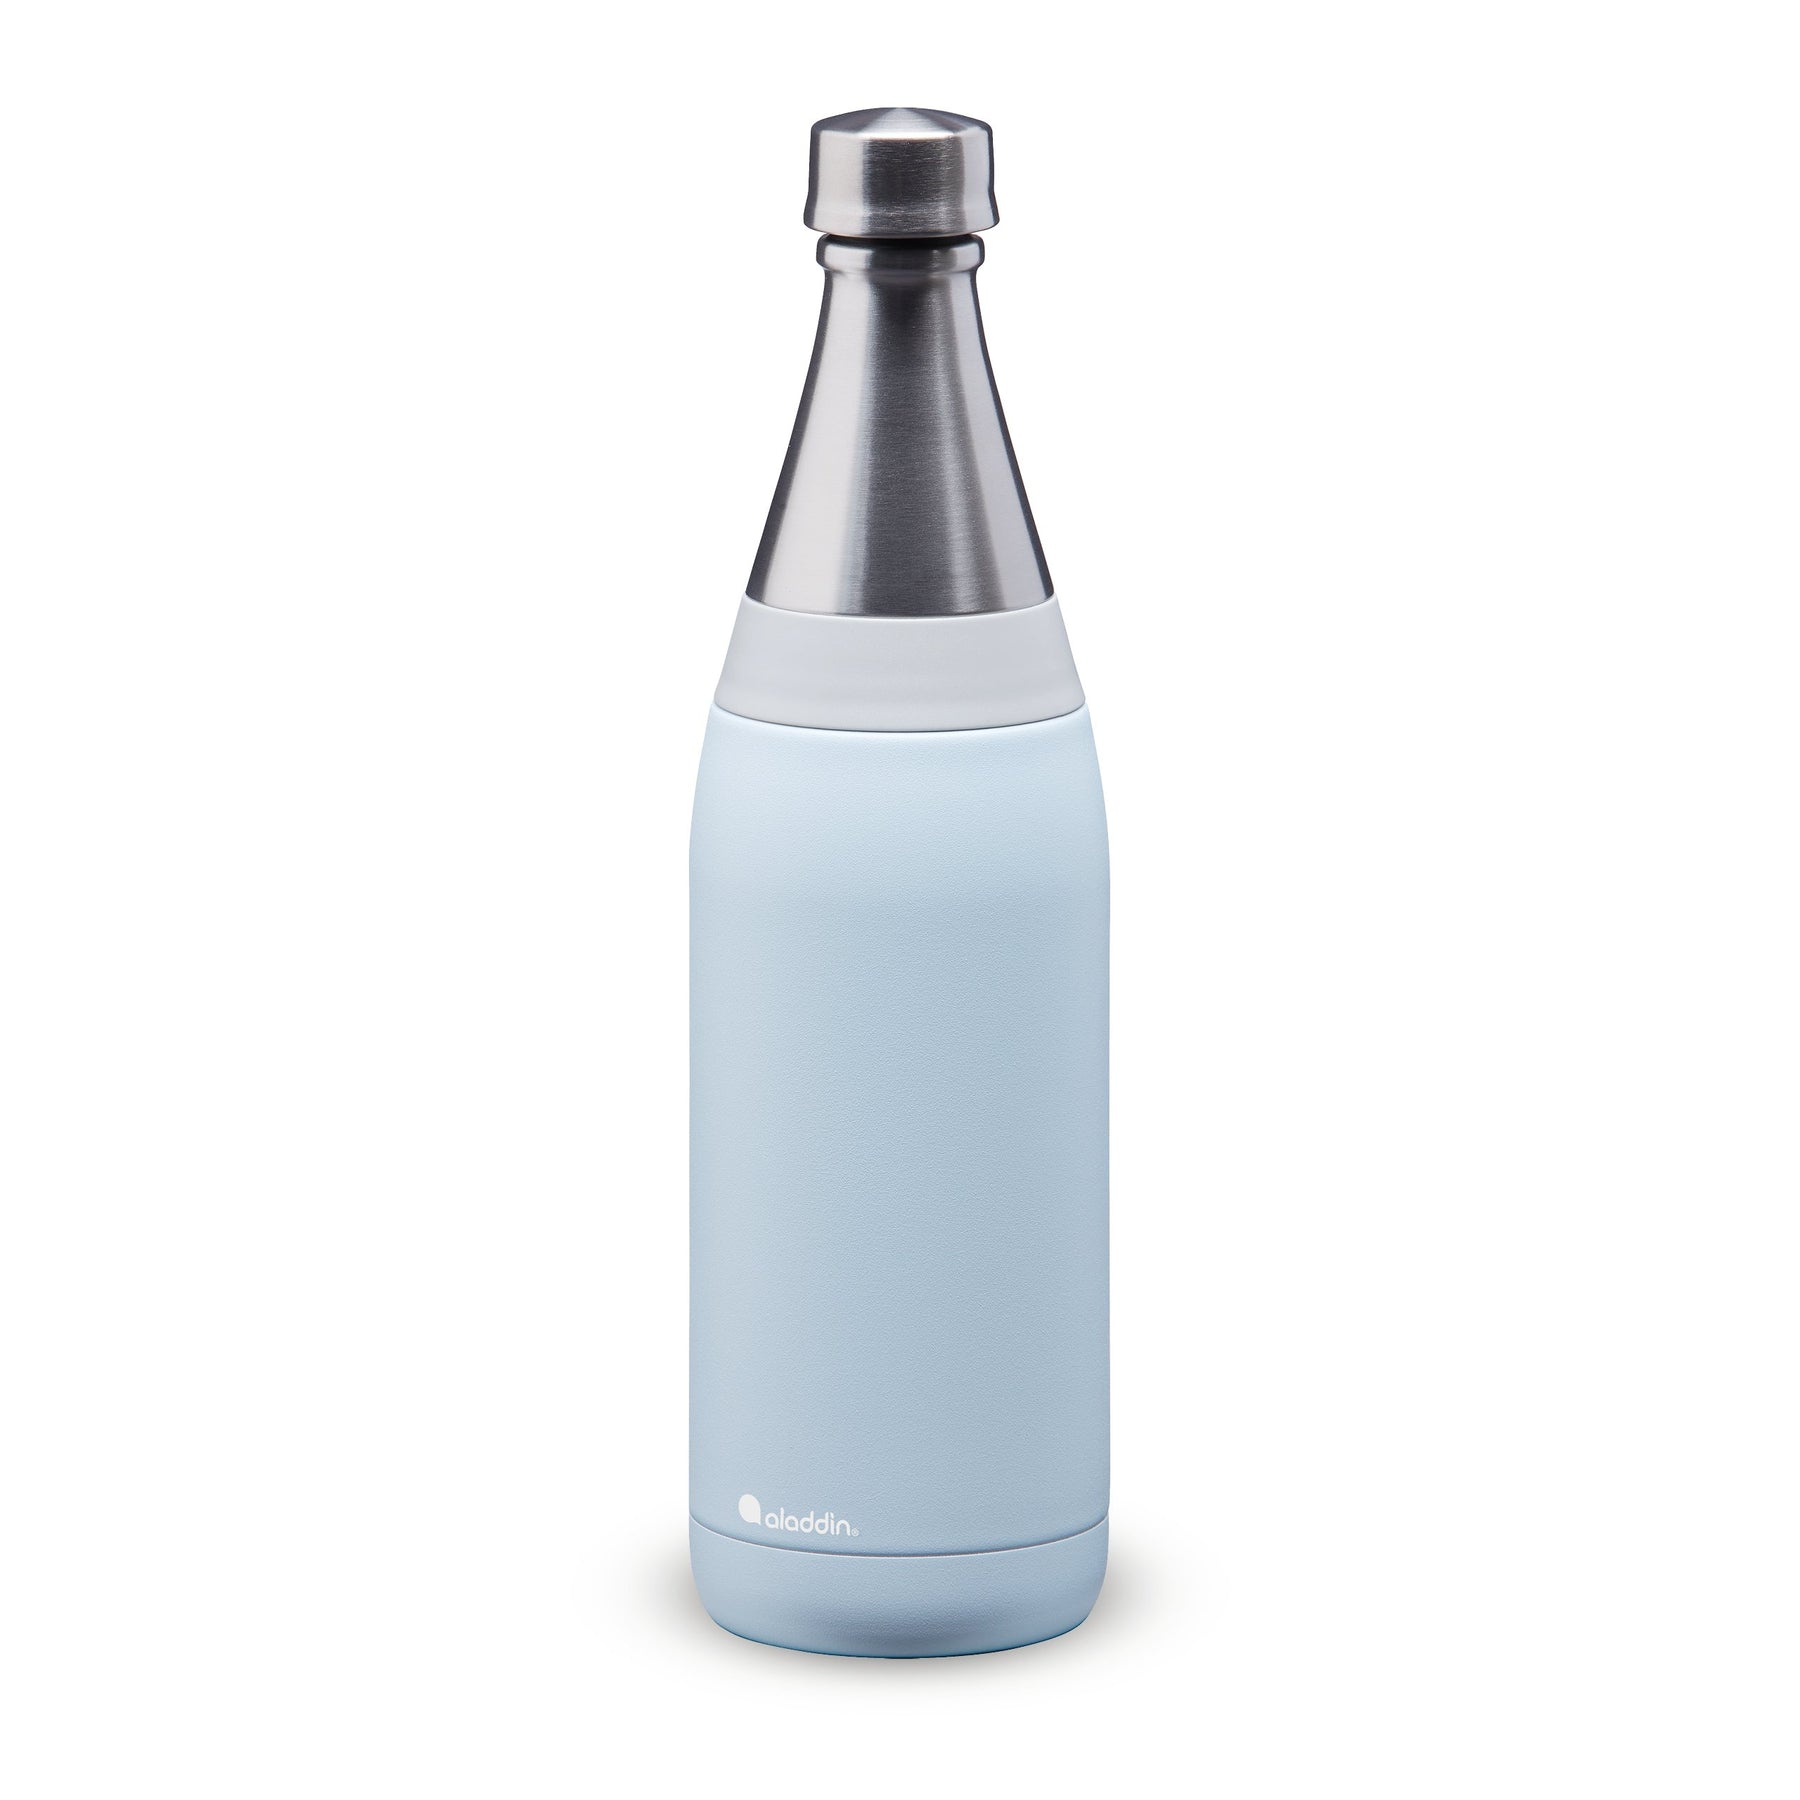 Aladdin-Fresco-Thermavac_-Stainless-Steel-Water-Bottle-0.6L-Sky-Blue-10-10098-007-Hero_1800x1800